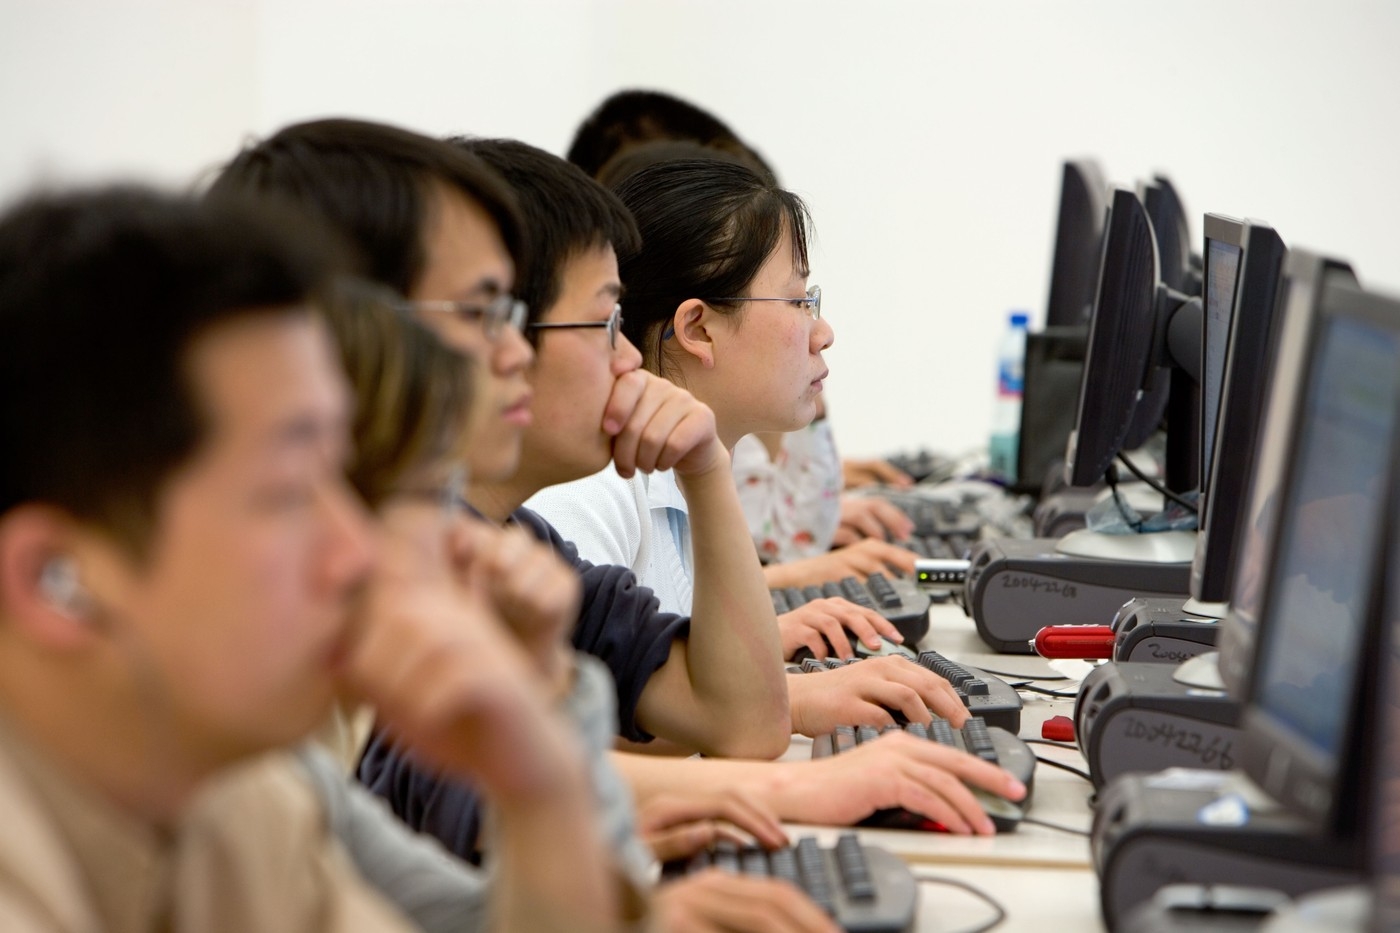 Kineski studenti u Internet kafeu